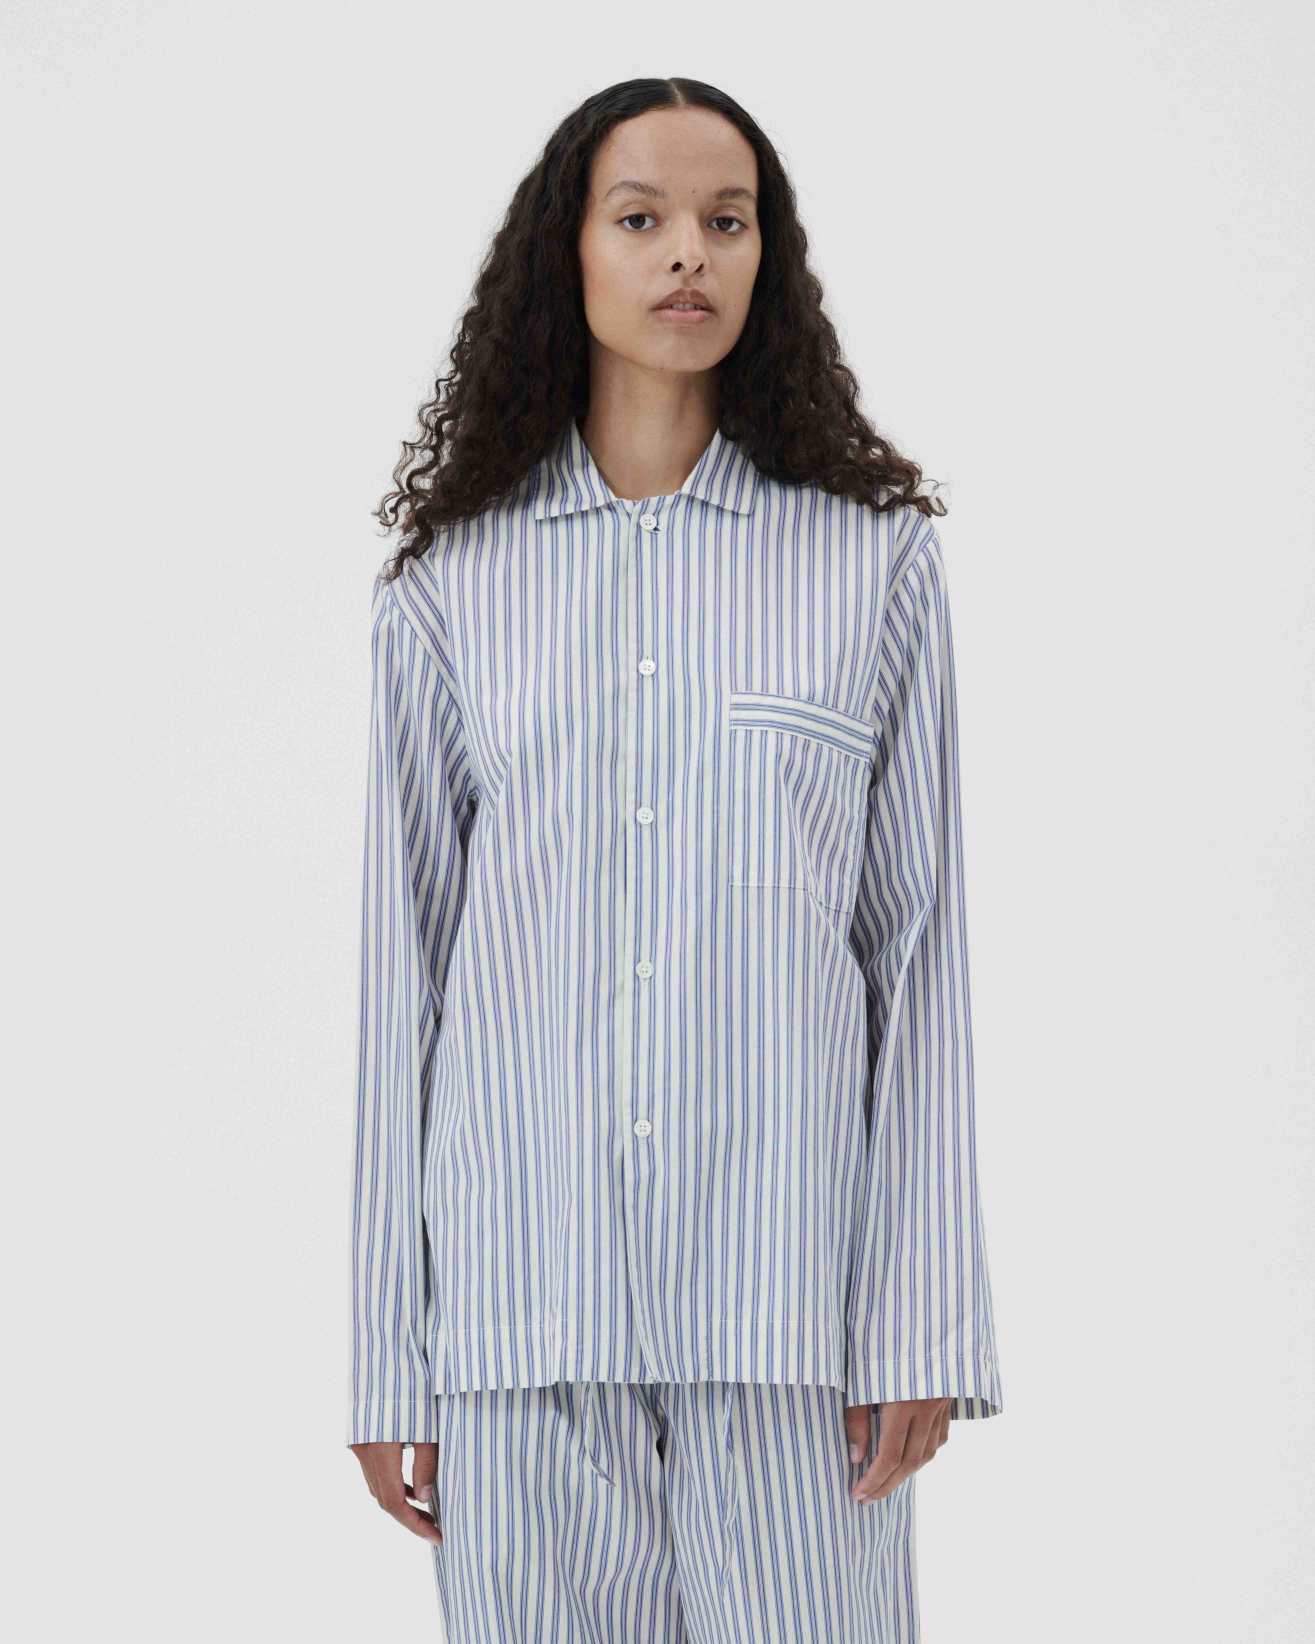 LASTINCH Plus Size Ash Grey Stripe Shirt for Women - Upto 8XL